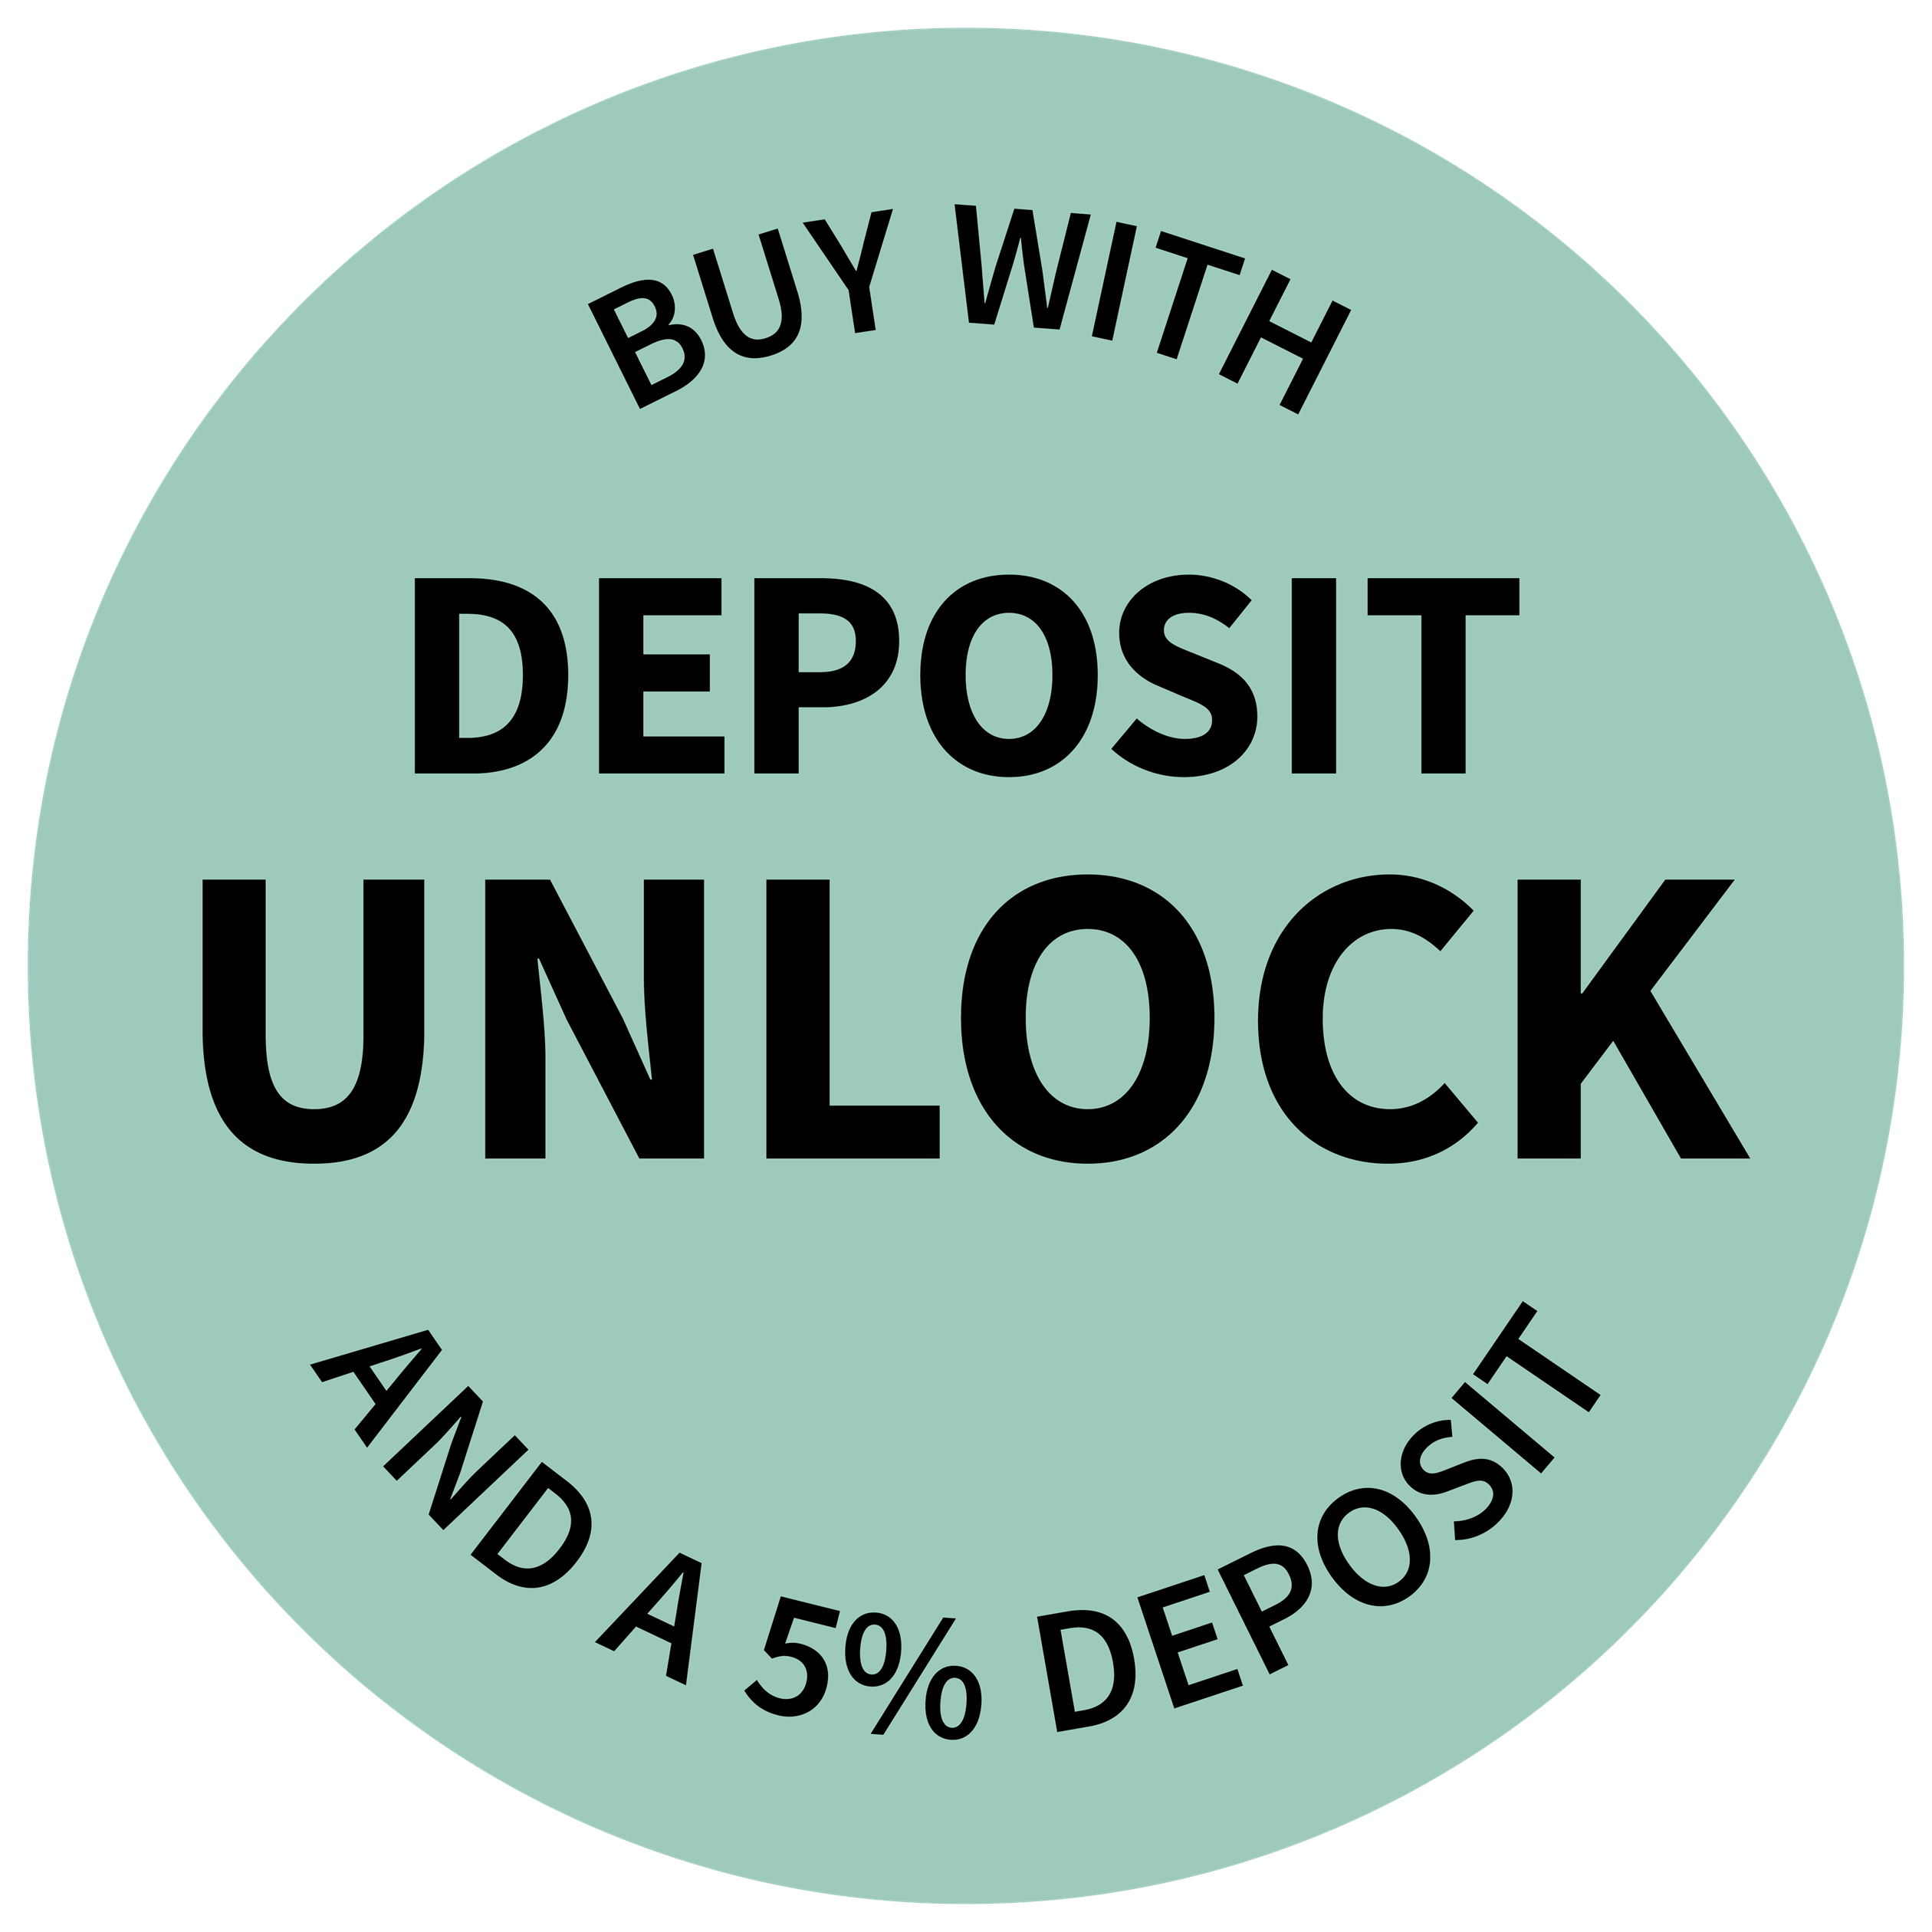 Deposit Unlock Lockup - Barratt London